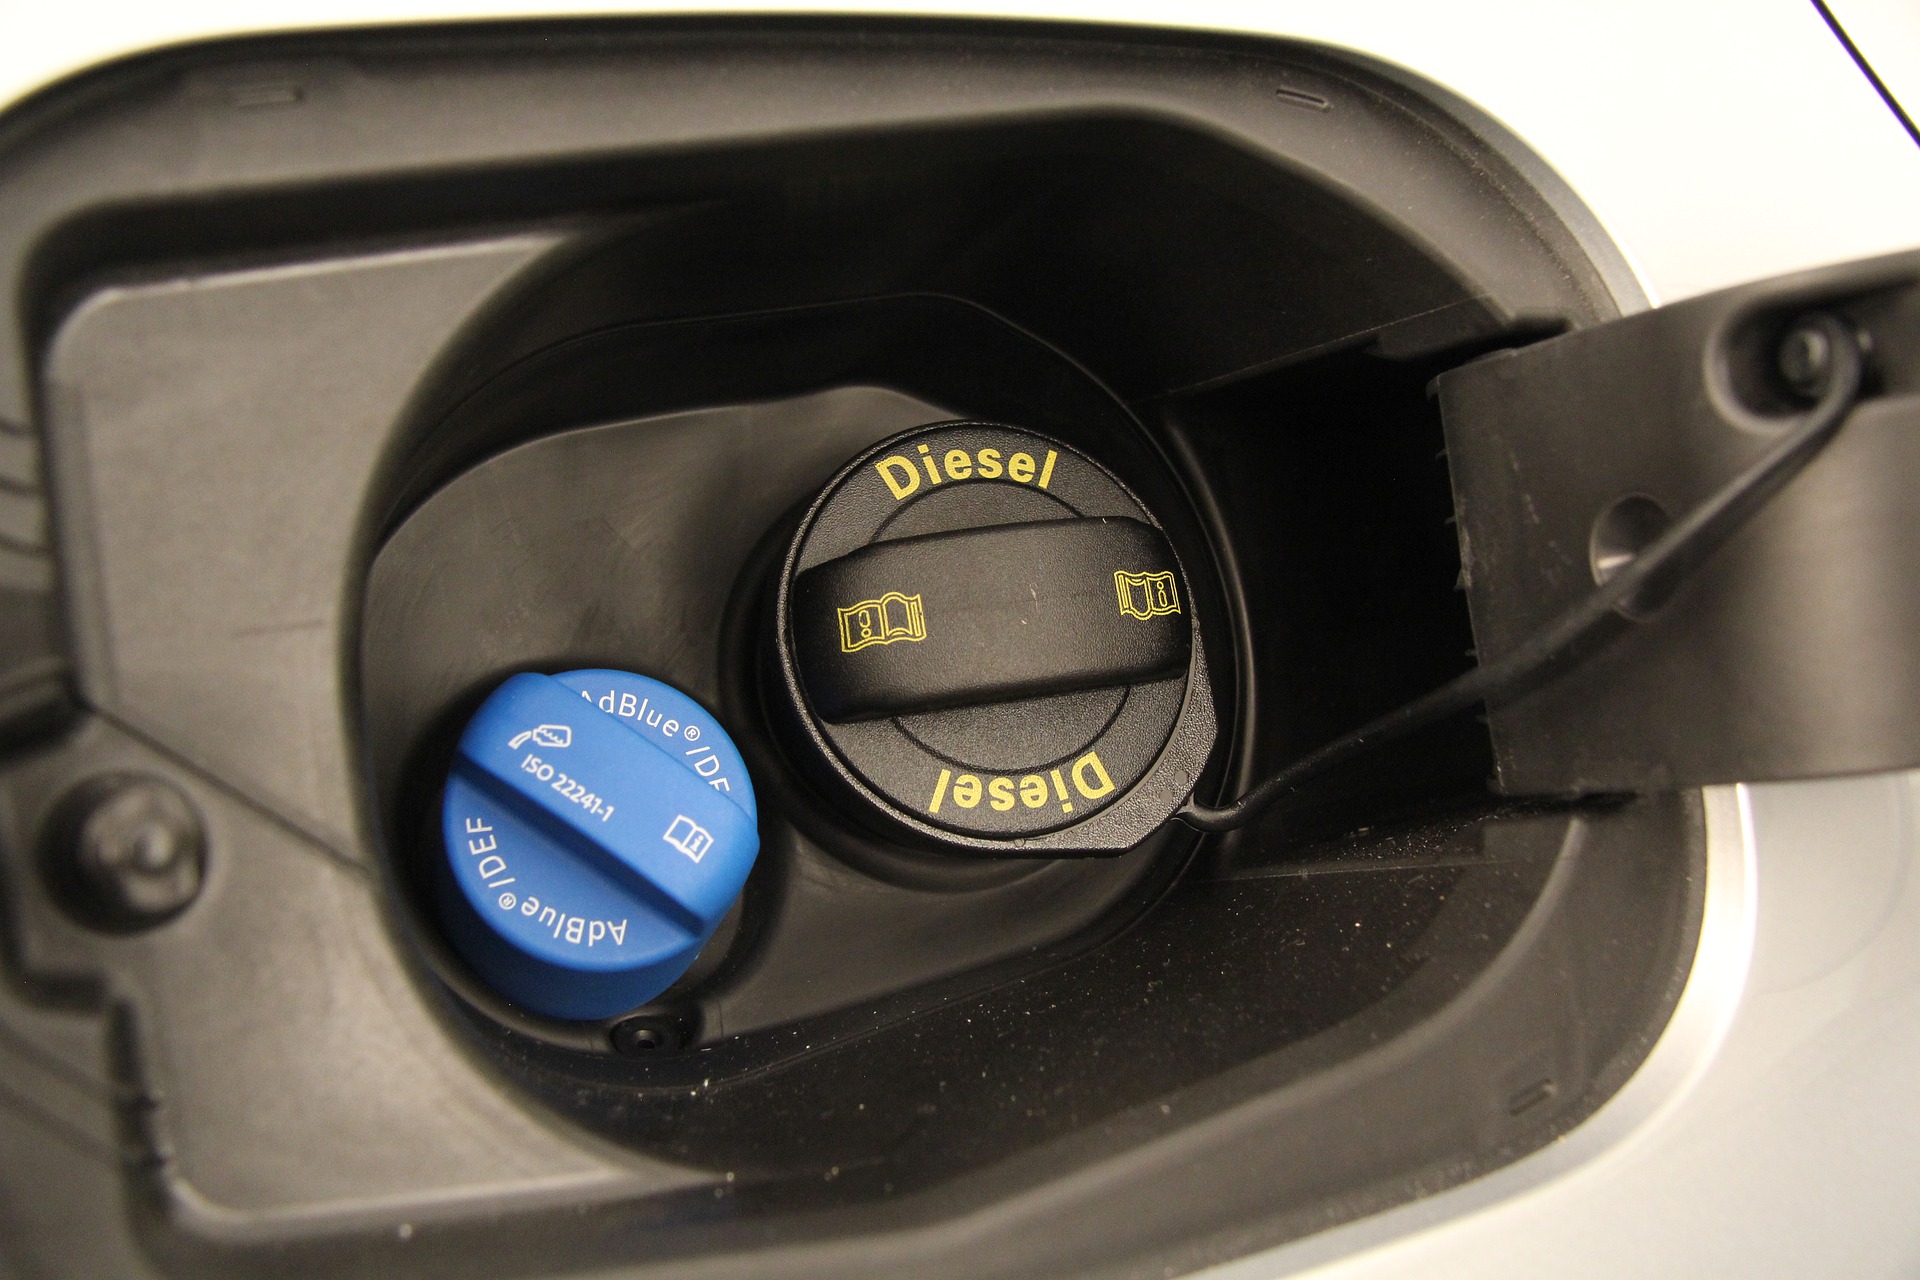 AdBlue urea tank lid next to the diesel tank lid